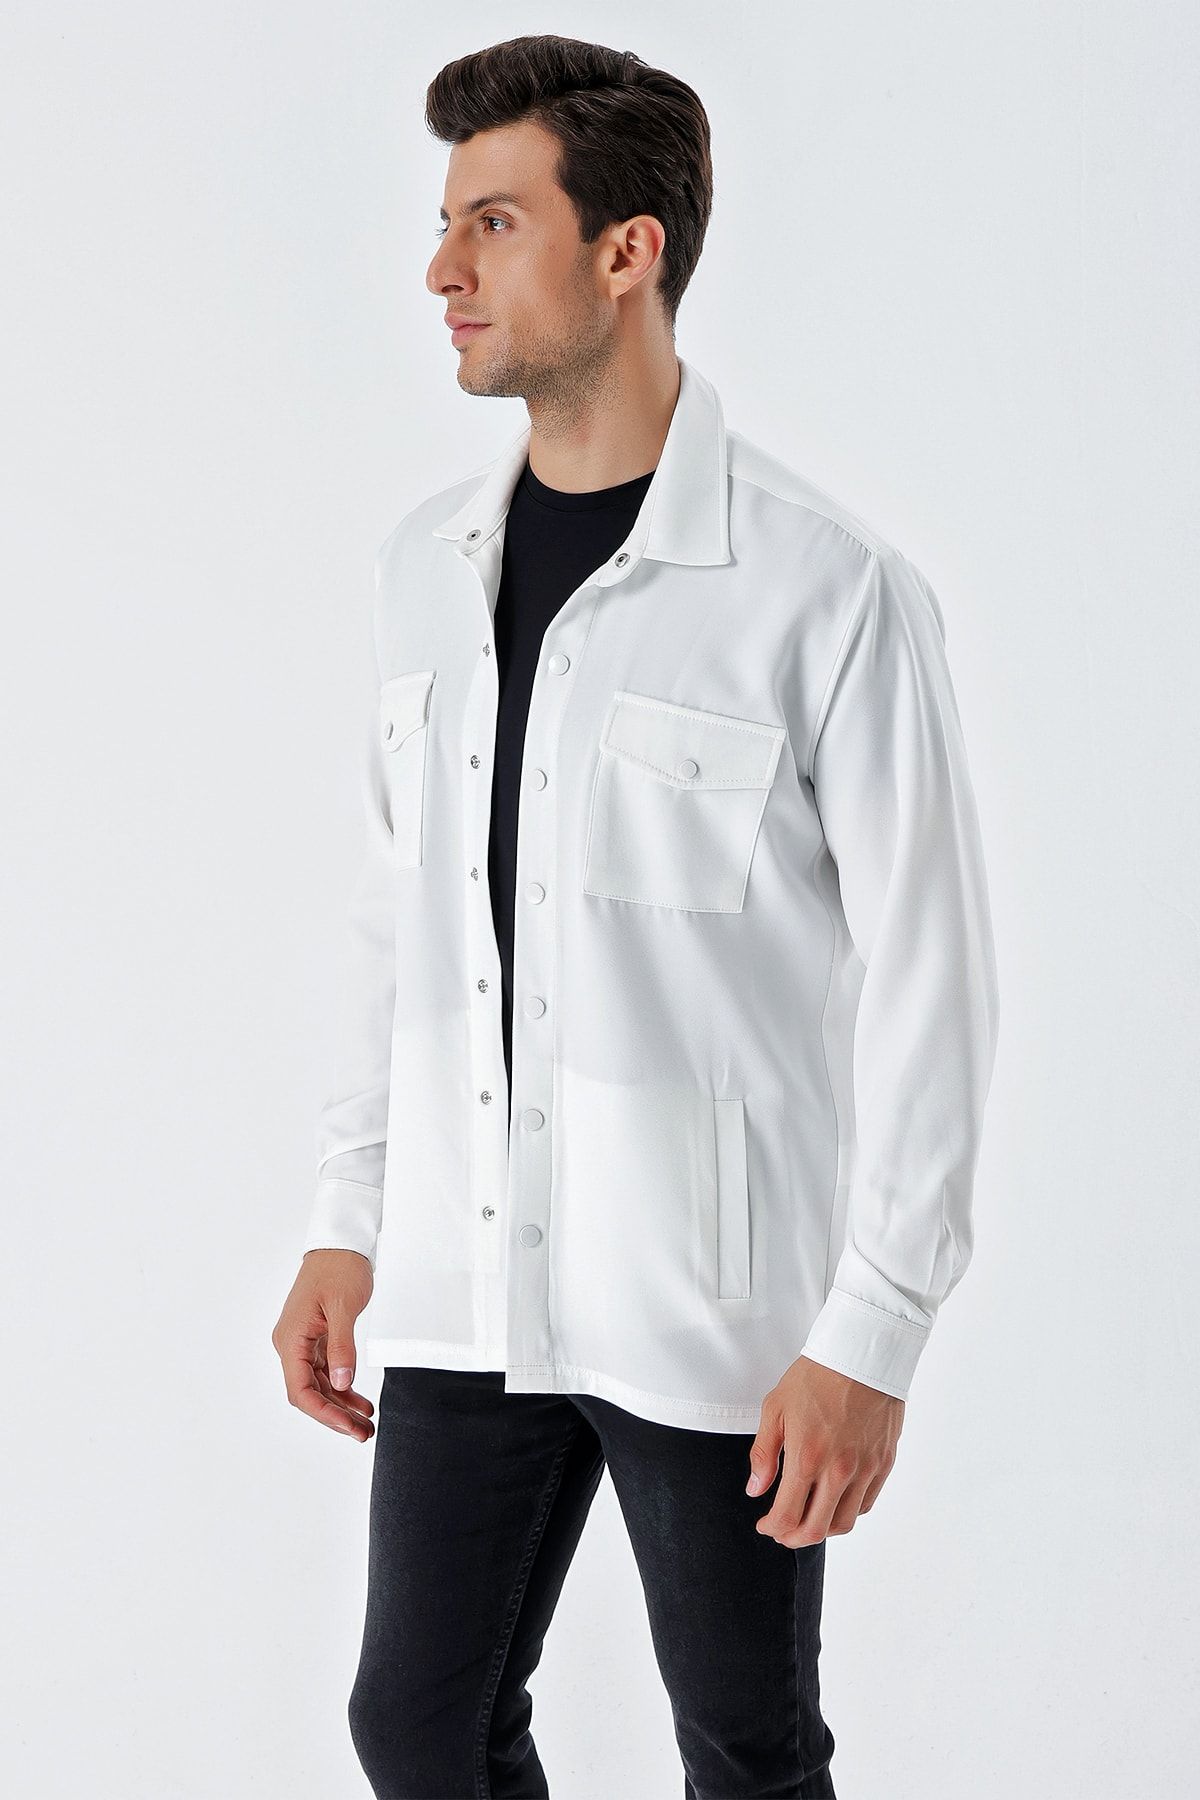 Bigdart پیراهن مردانه بزرگ 20193 - سفید